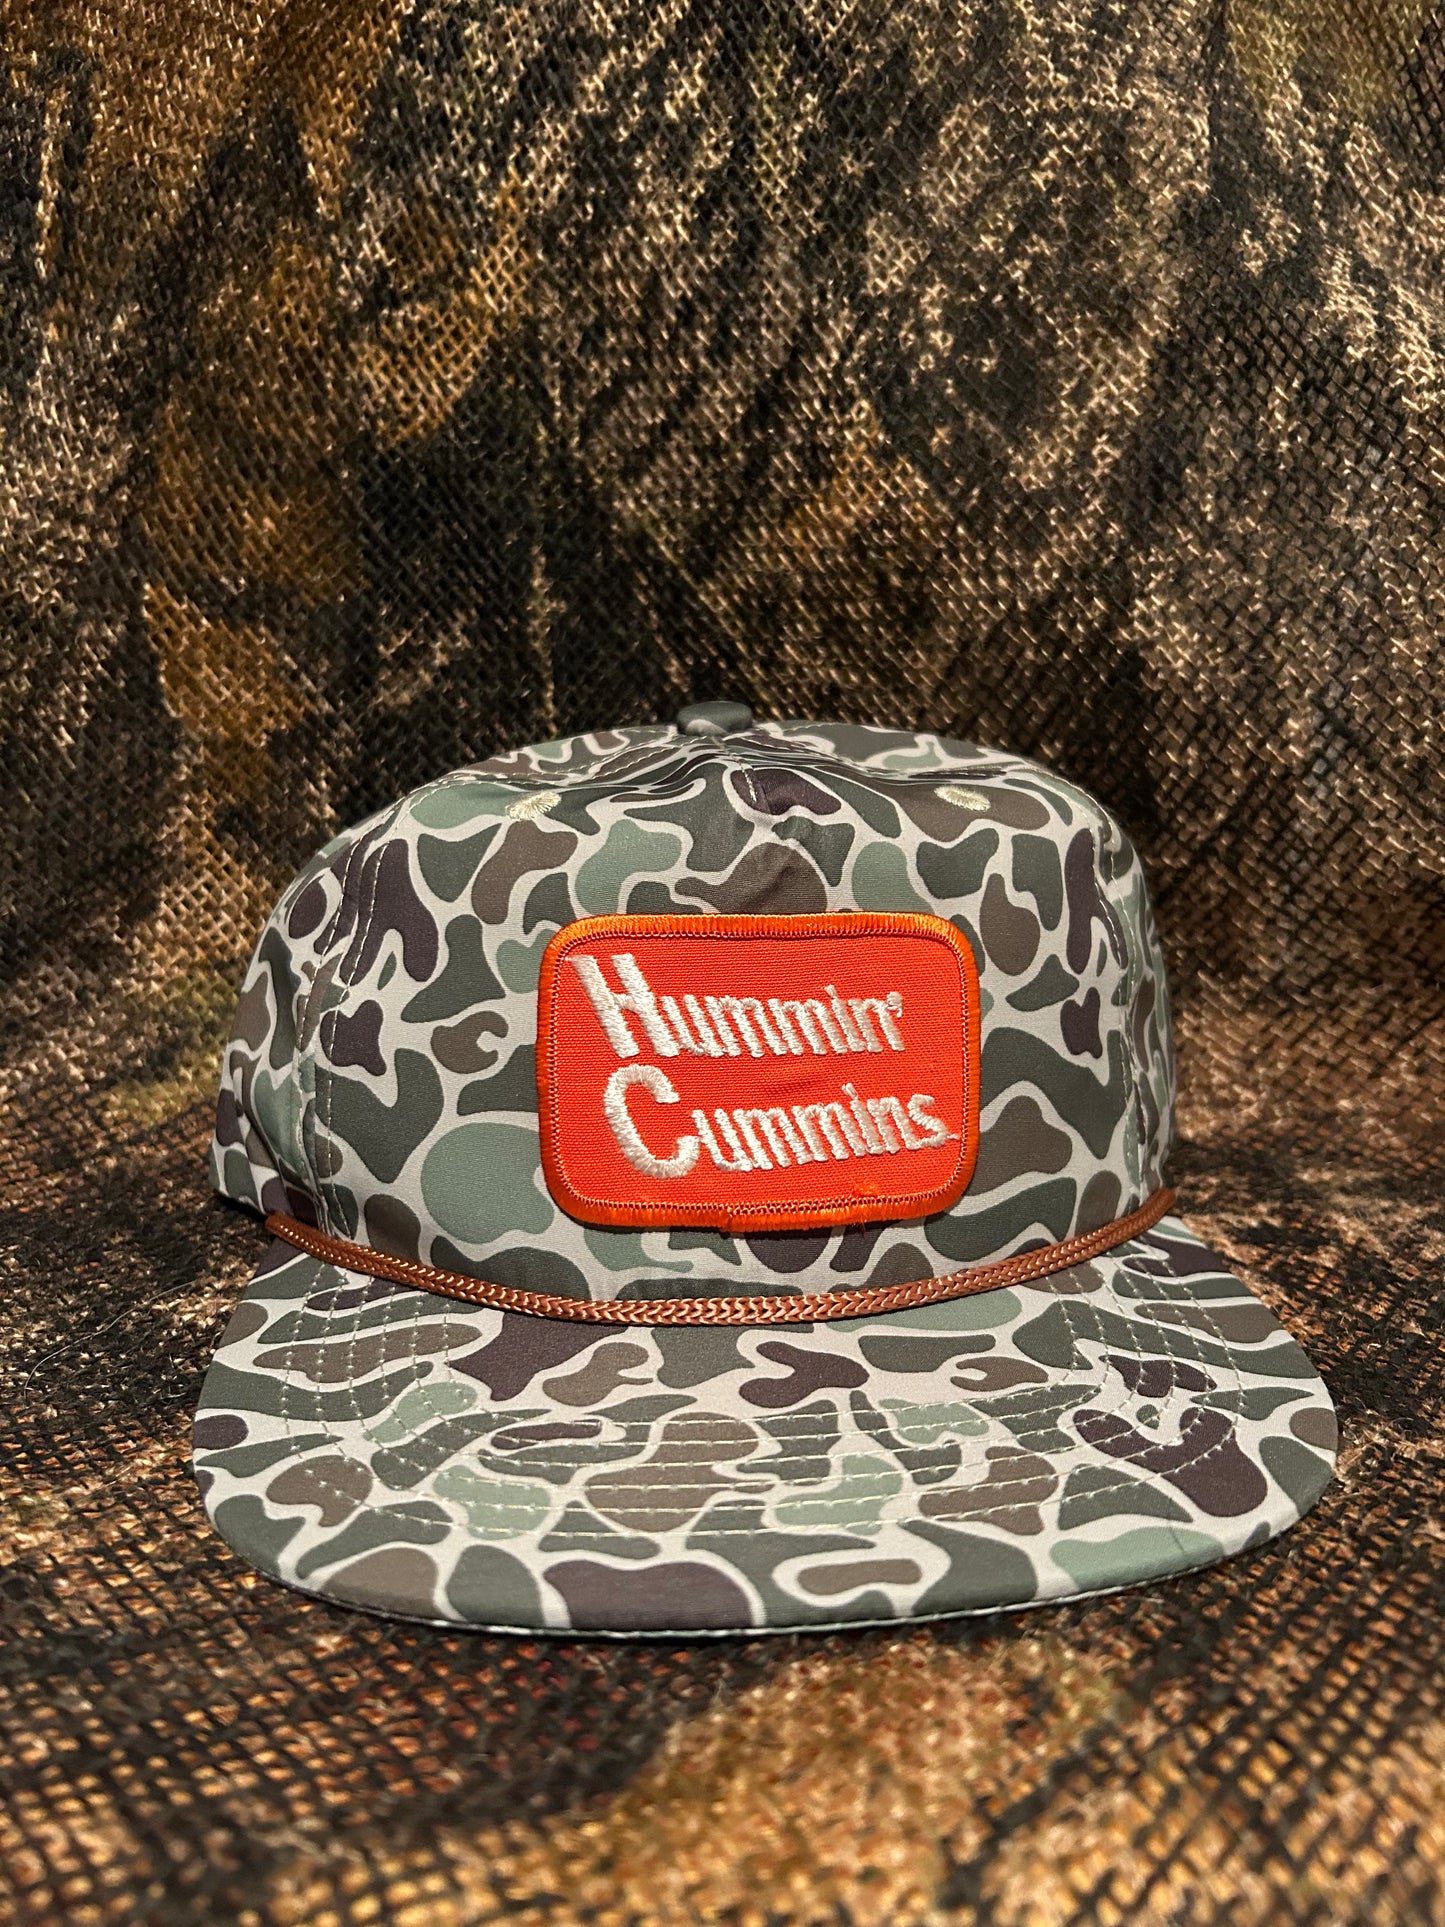 Hummin Cummins jungle Camo ropebrim SnapBack hat